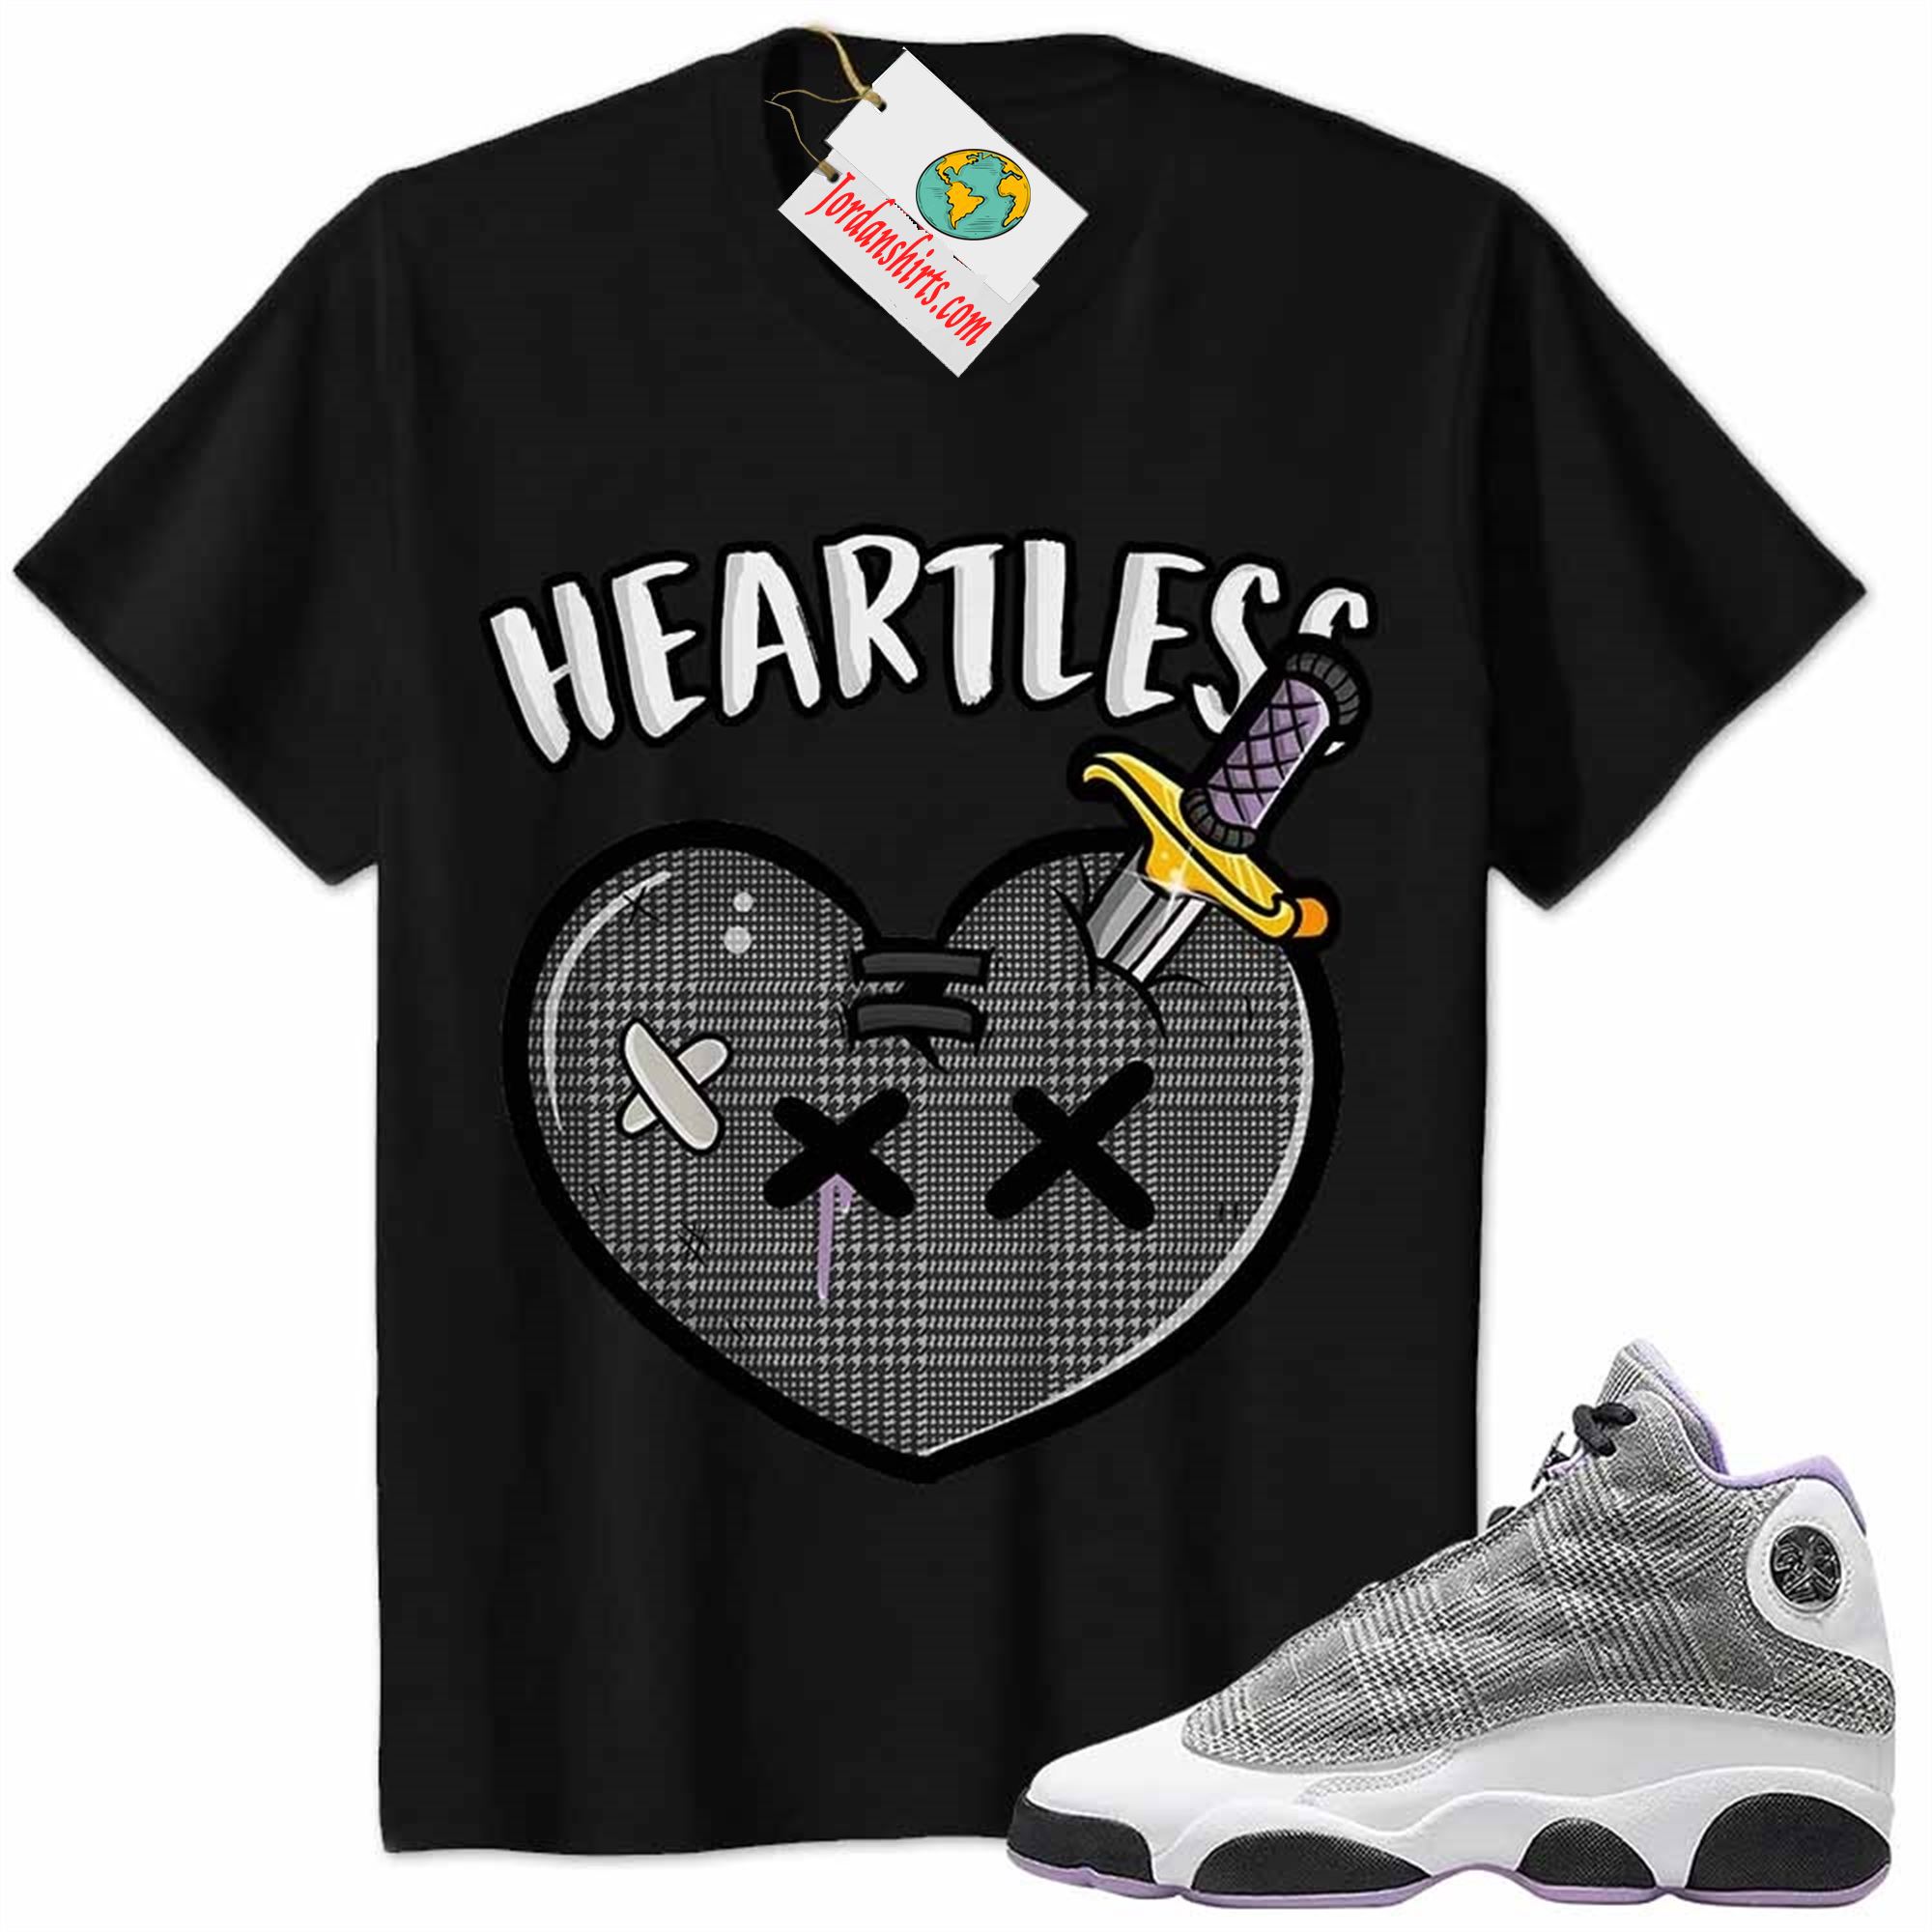 Jordan 13 Shirt, Crying Heart Heartless Black Air Jordan 13 Houndstooth 13s Plus Size Up To 5xl